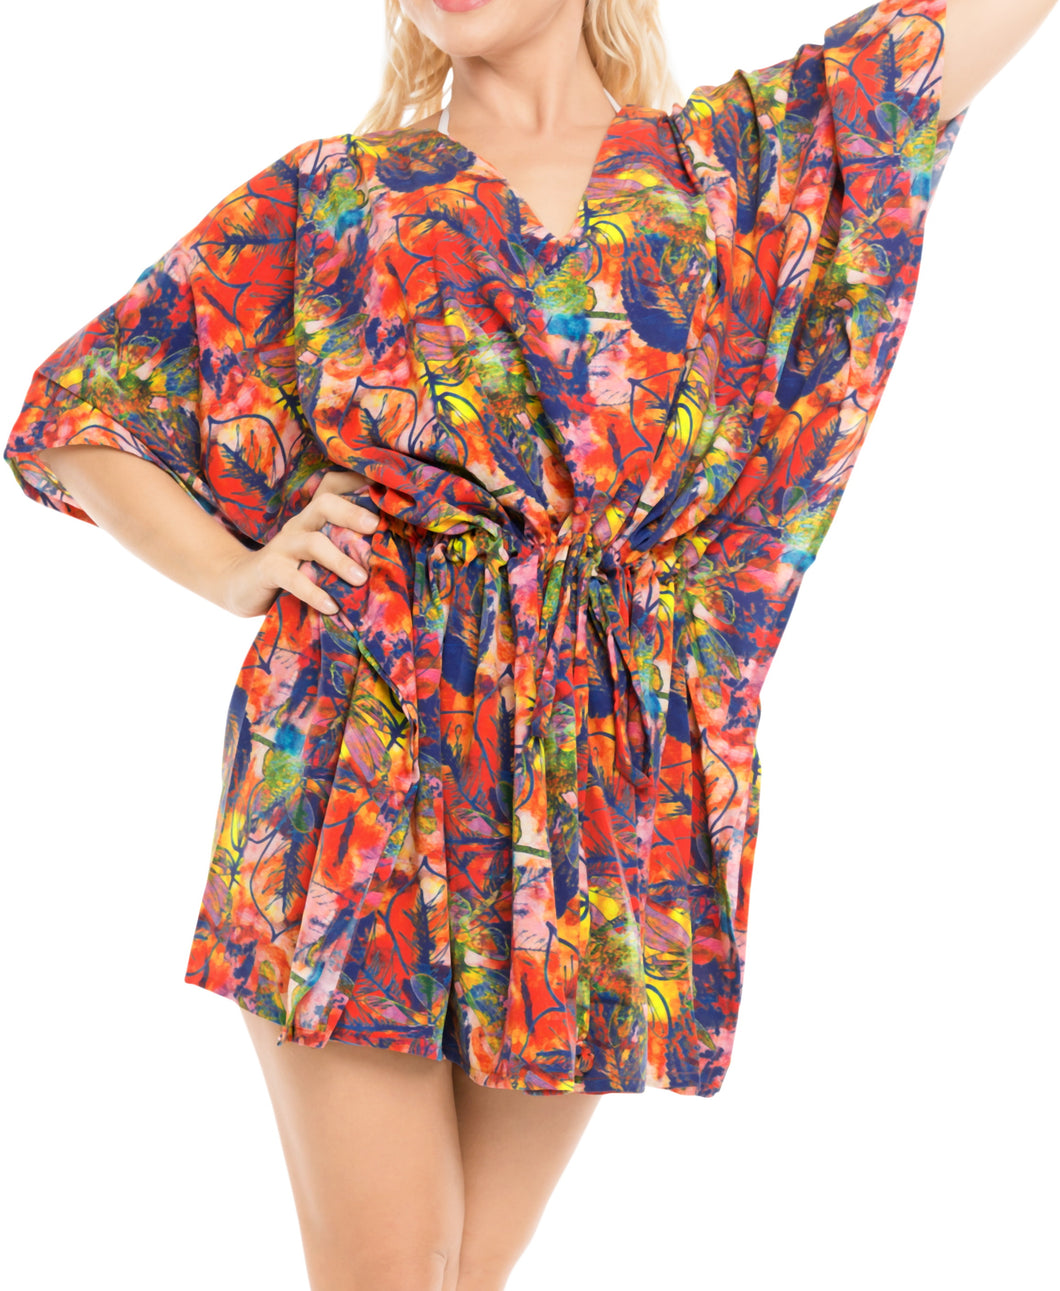 la-leela-bikni-swimwear-soft-fabric-digital-hd-print-cruise-cardigan-cover-up-osfm-14-28-l-4x-multicolor_2101